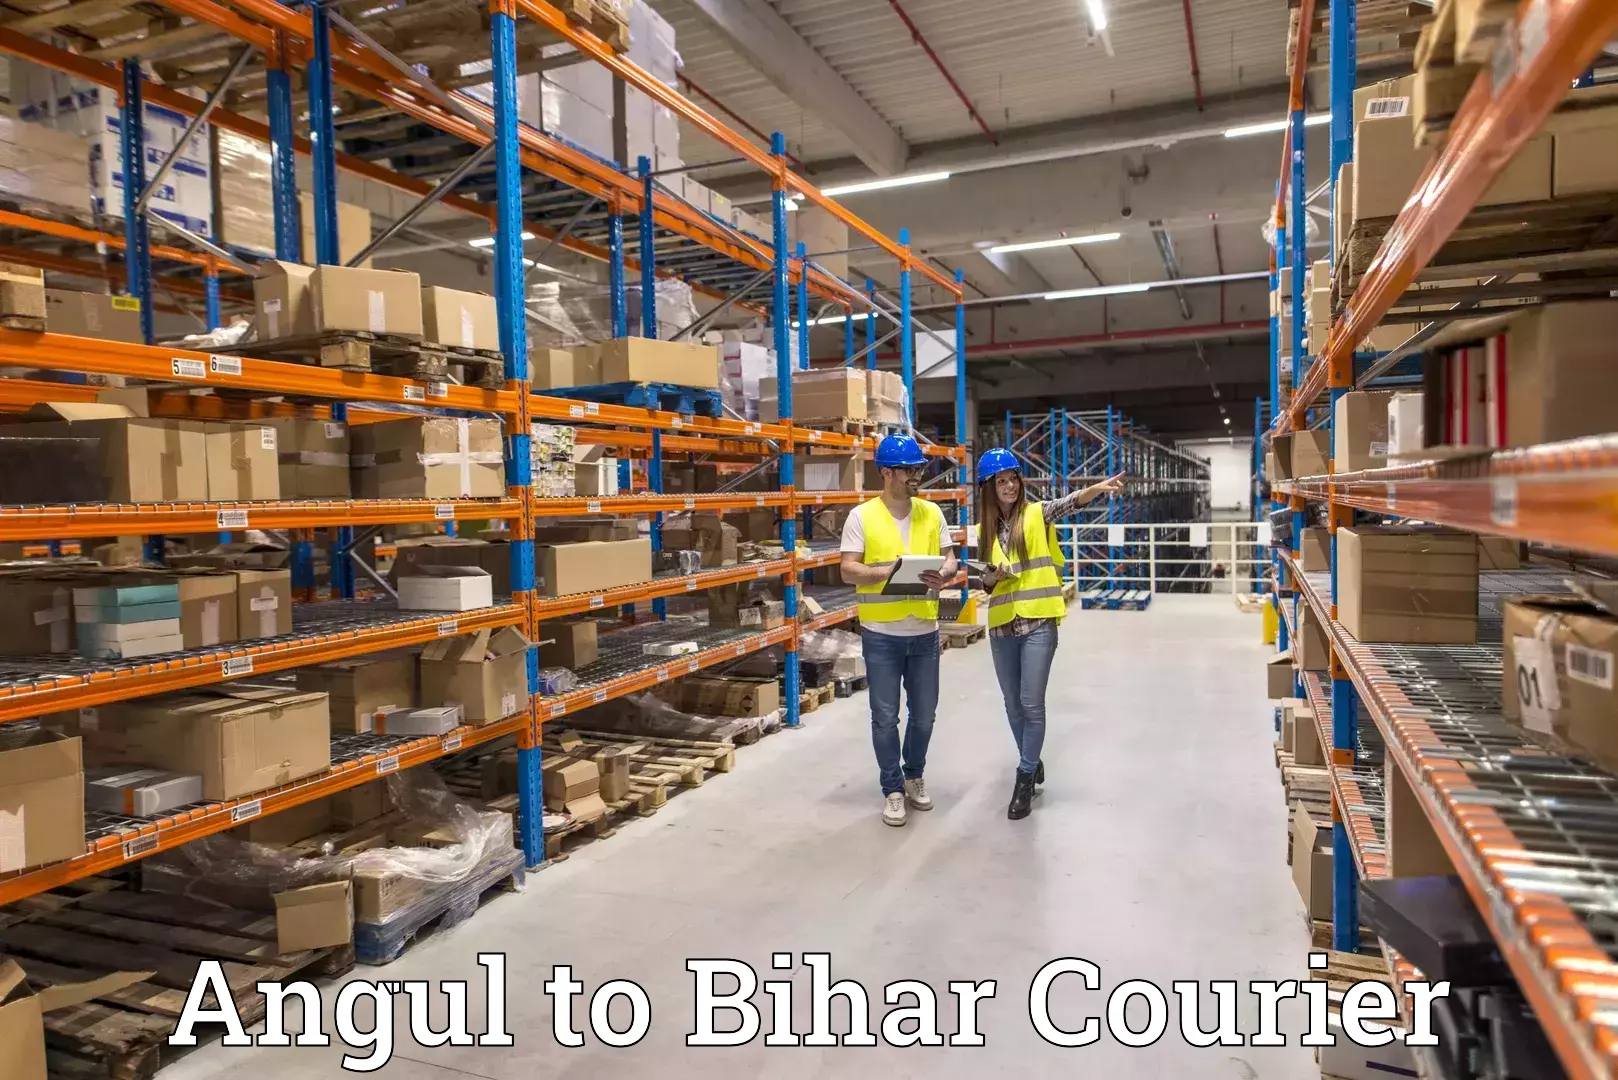 Digital courier platforms Angul to Bihar